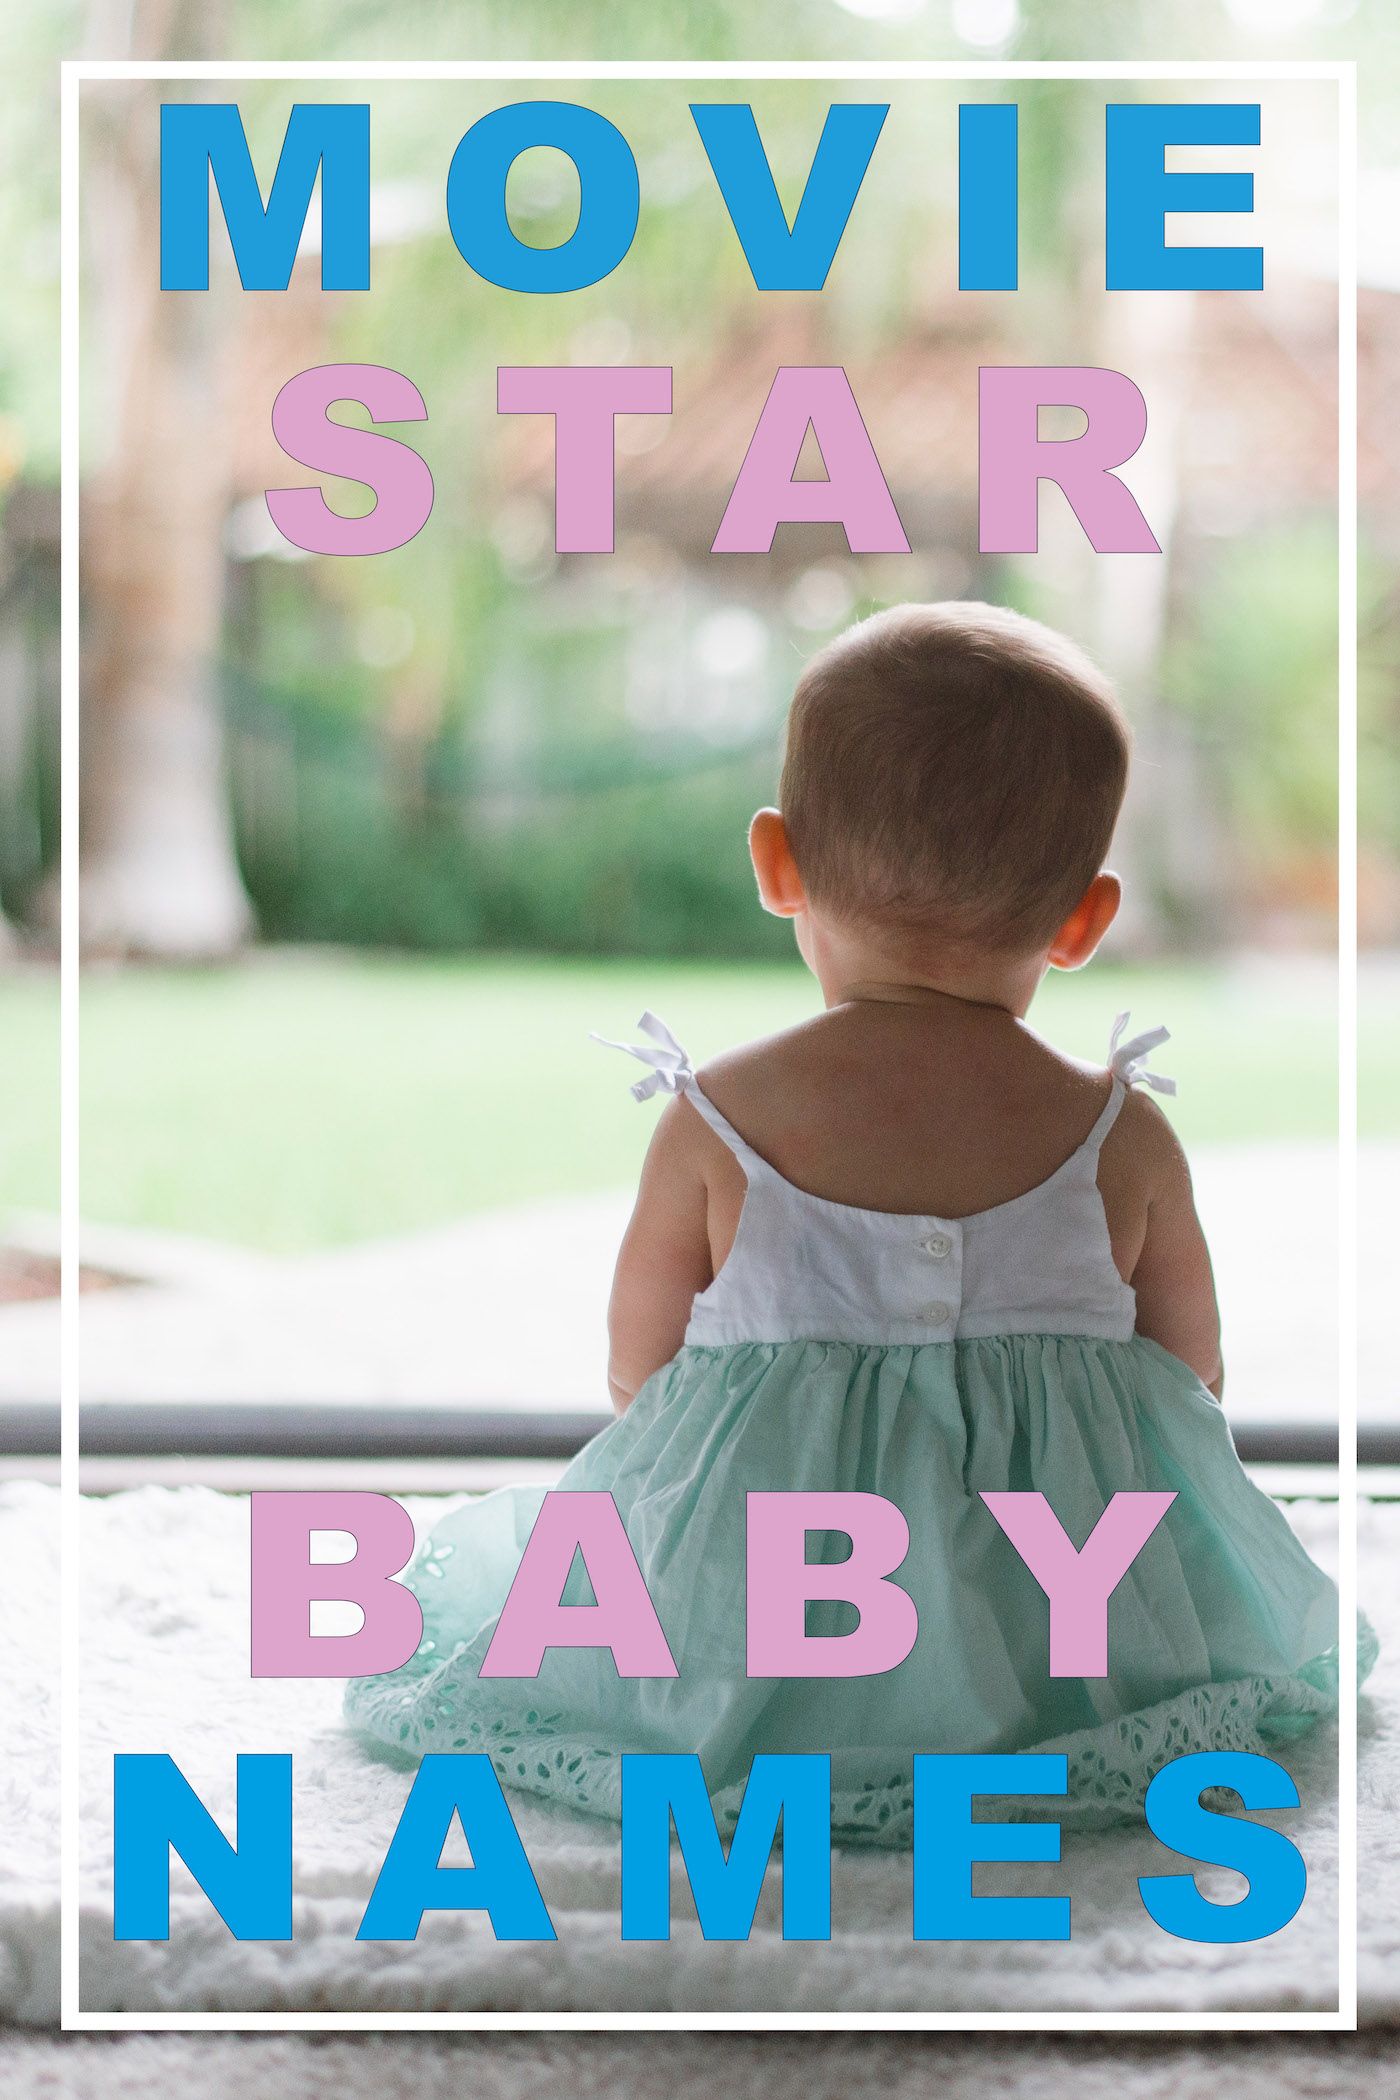 MOVIE STAR BABY NAMES (Epub2), e-bog af Nicotext Publishing